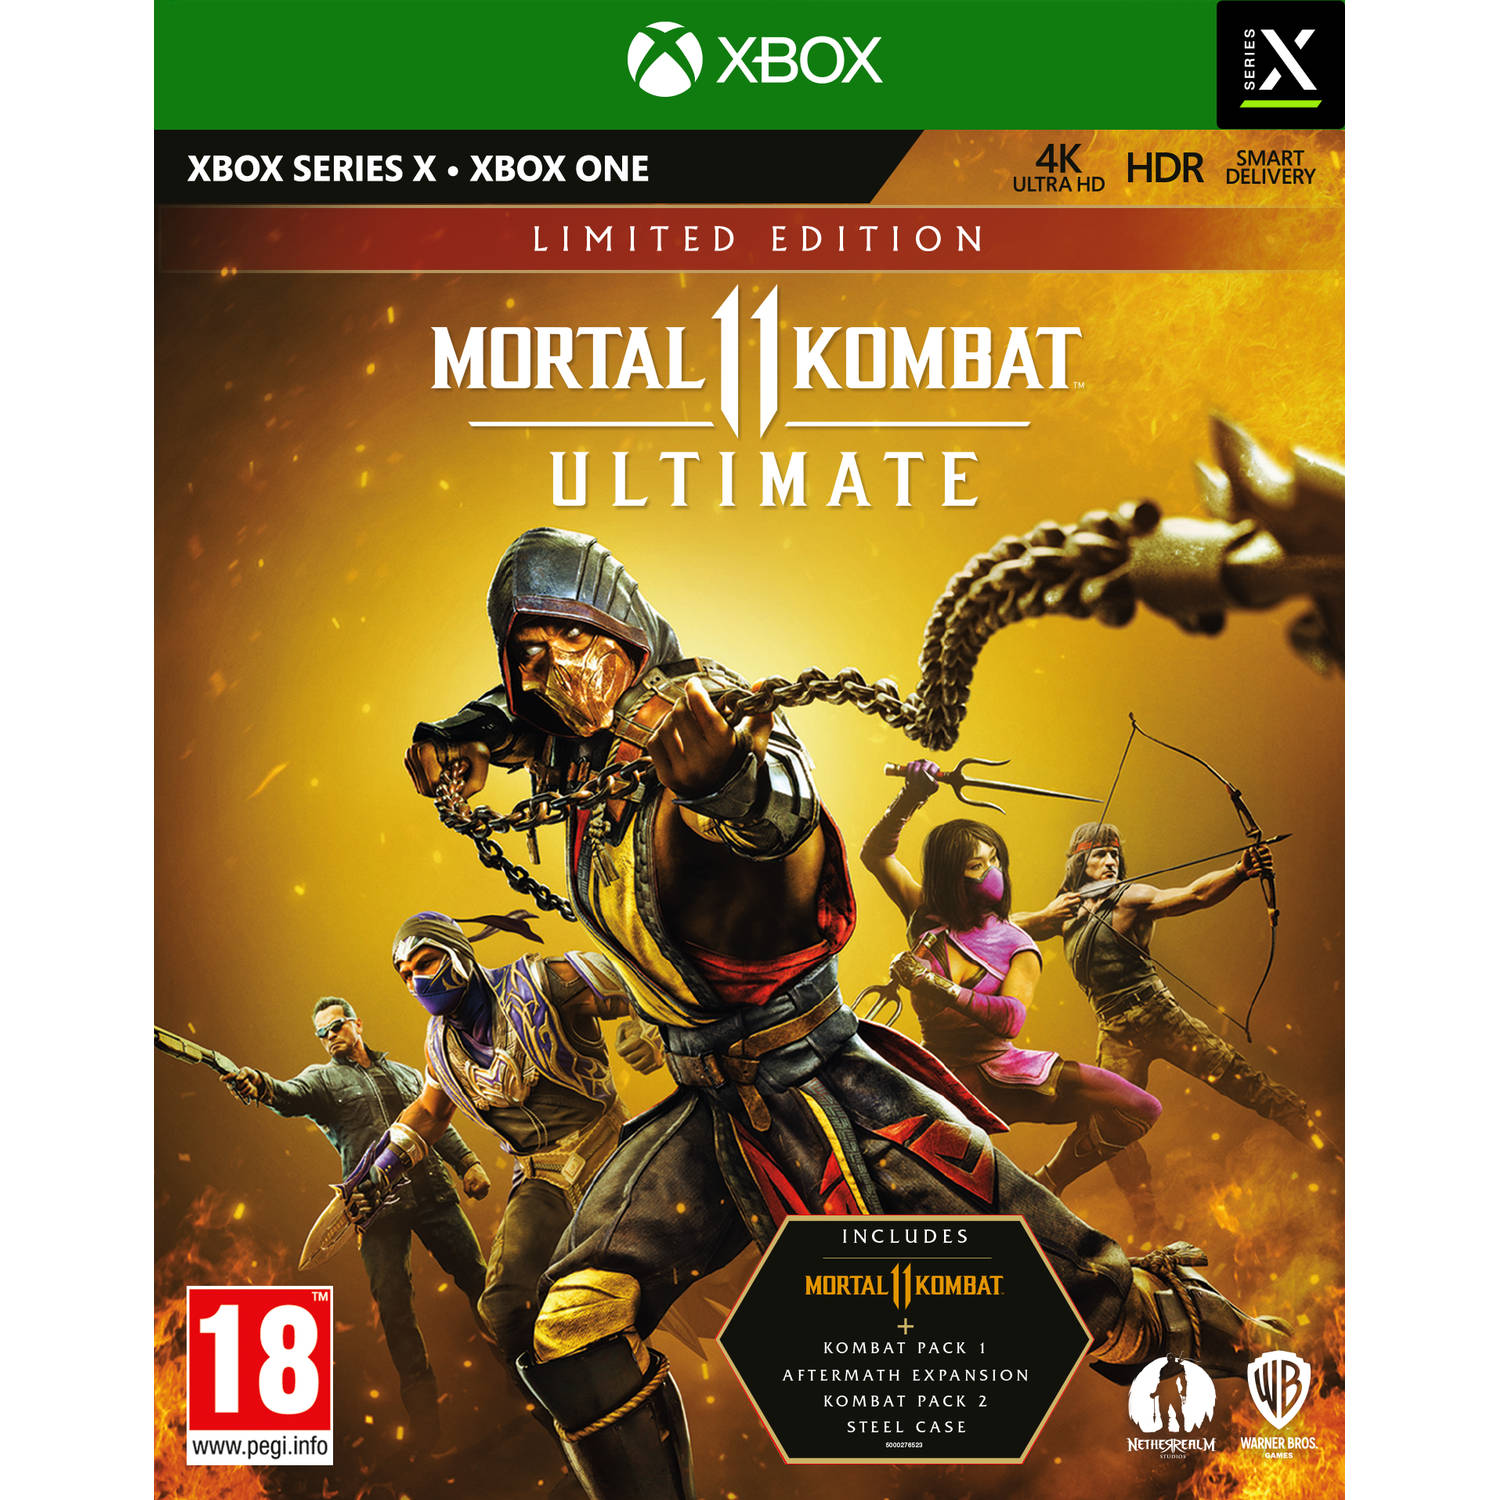 Mortal kombat 11 Ultimate (Limited edition), (X-Box Series X).